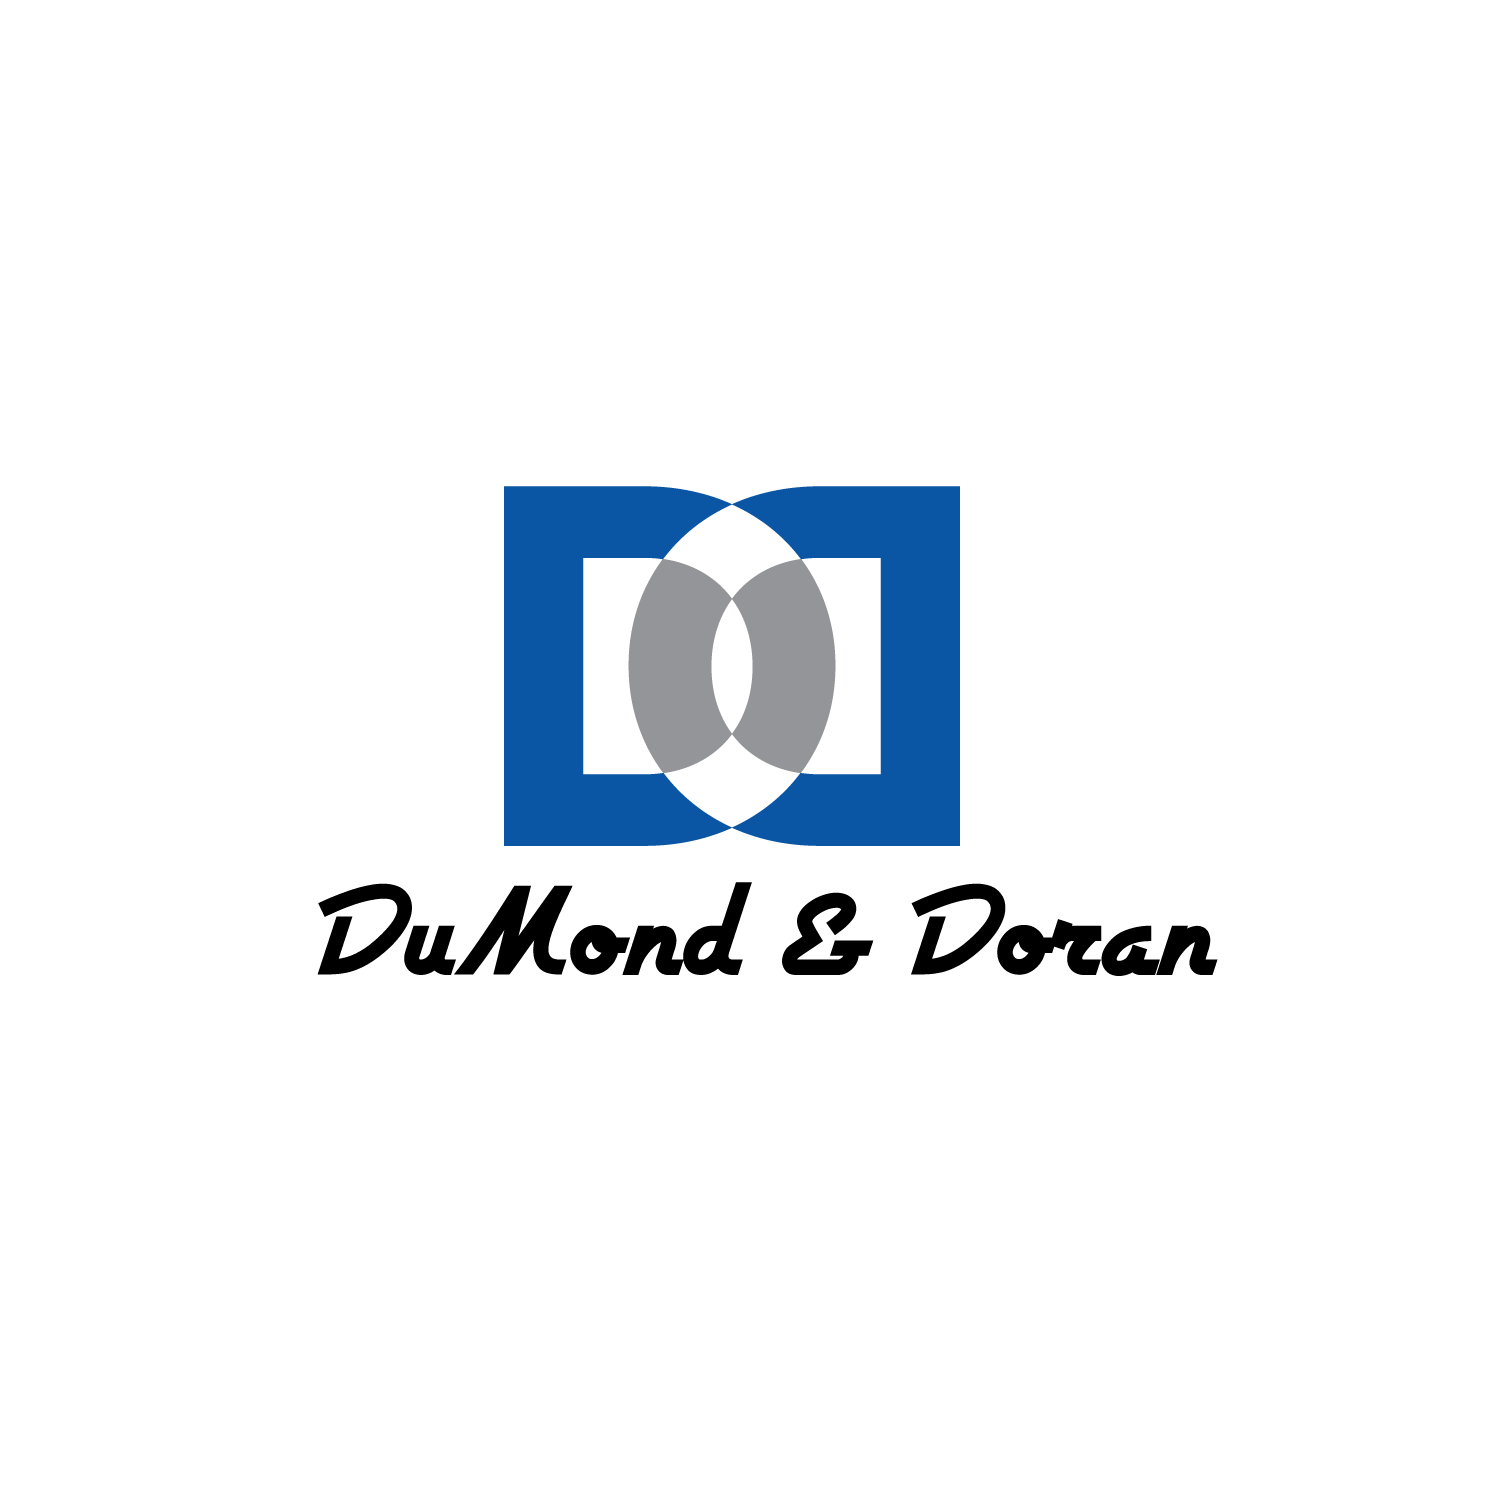 Doran Logo - Professional, Modern, Legal Logo Design for DuMond & Doran by James ...